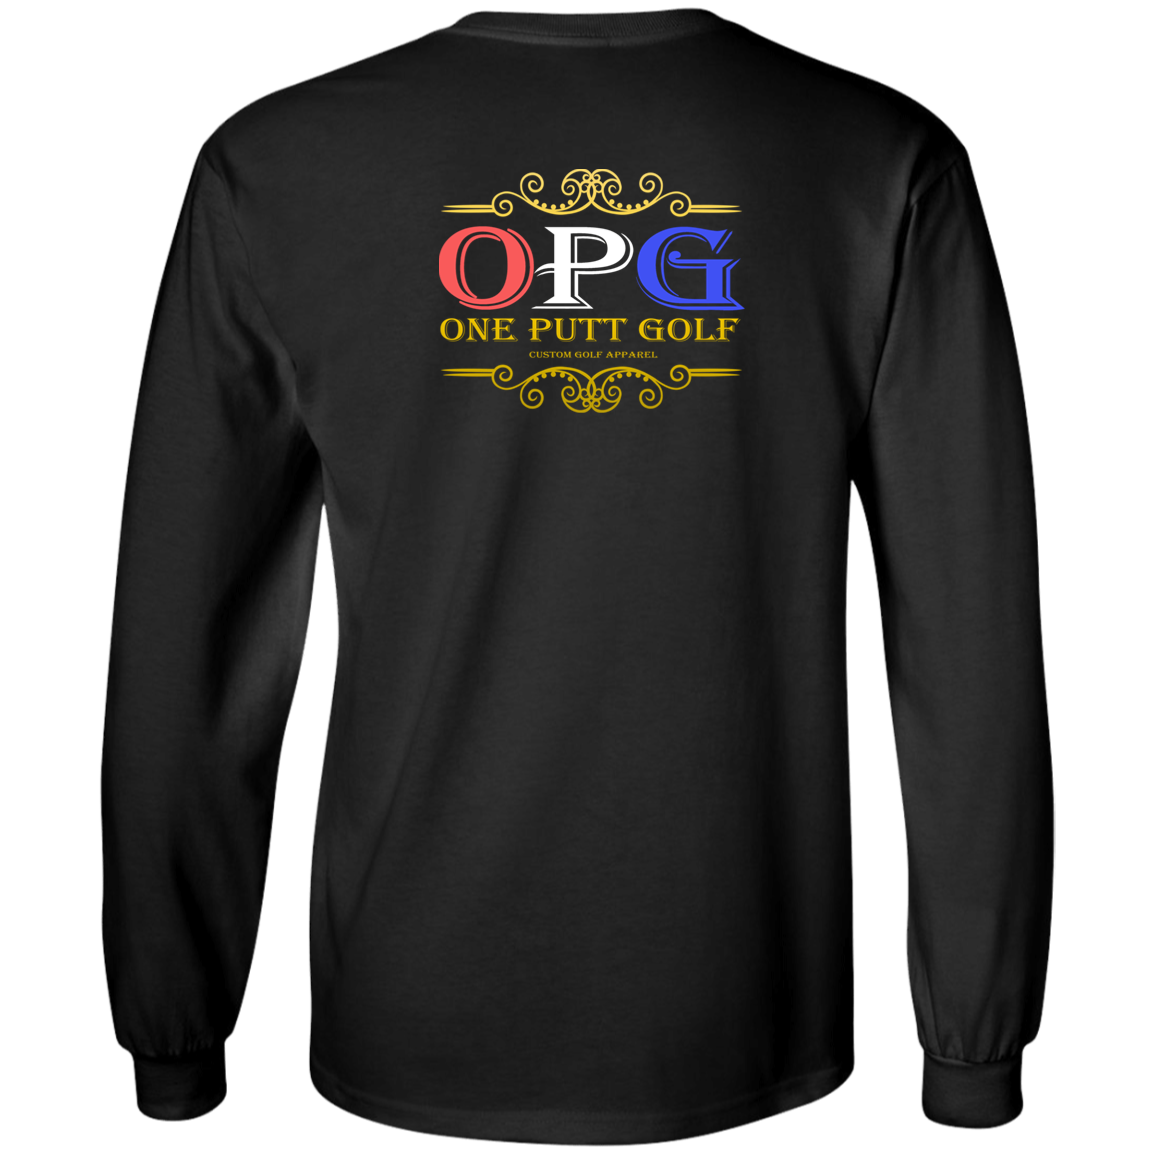 OPG Custom Design #6. Driveristee & Inclusion. 100% Cotton Long Sleeve T-Shirt